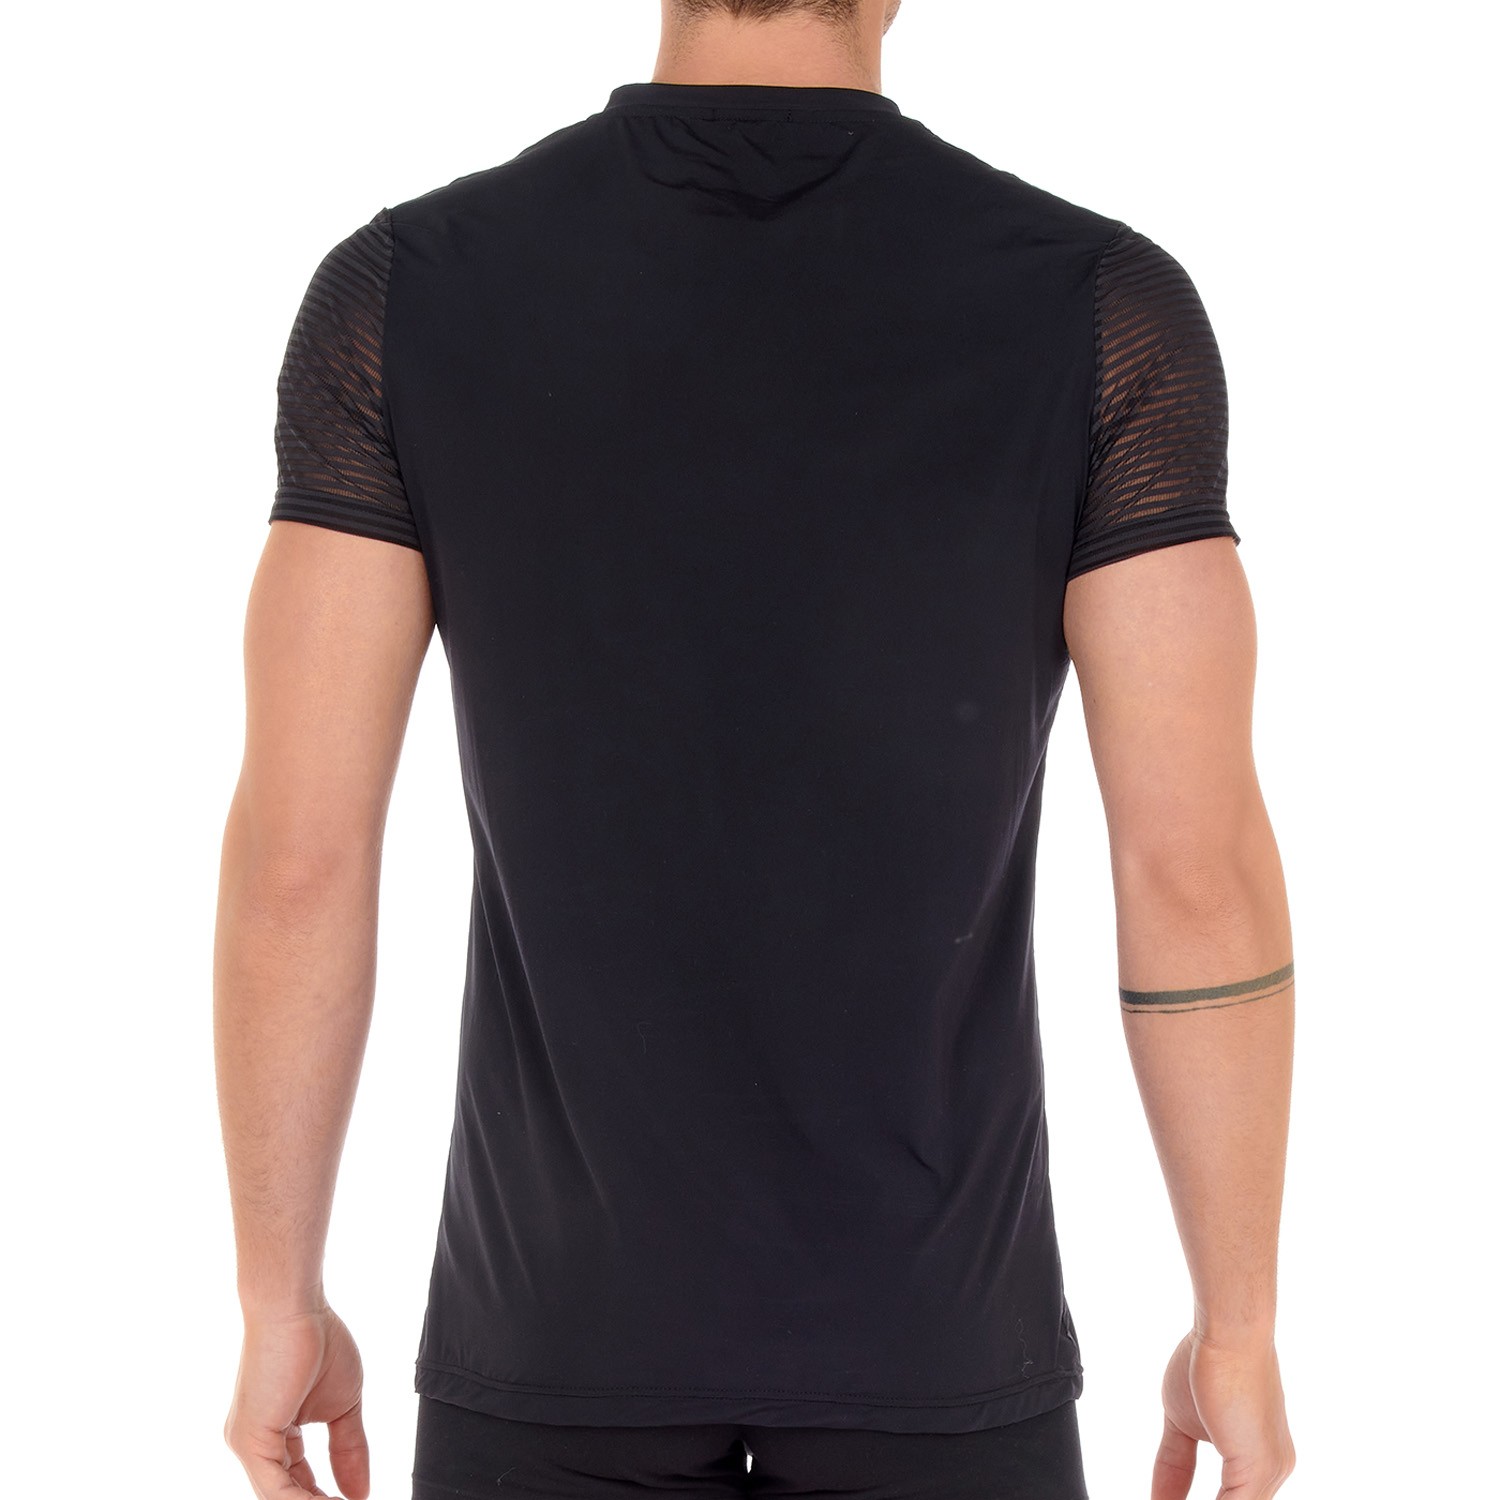 T-shirt thermique homme – Fit Super-Humain